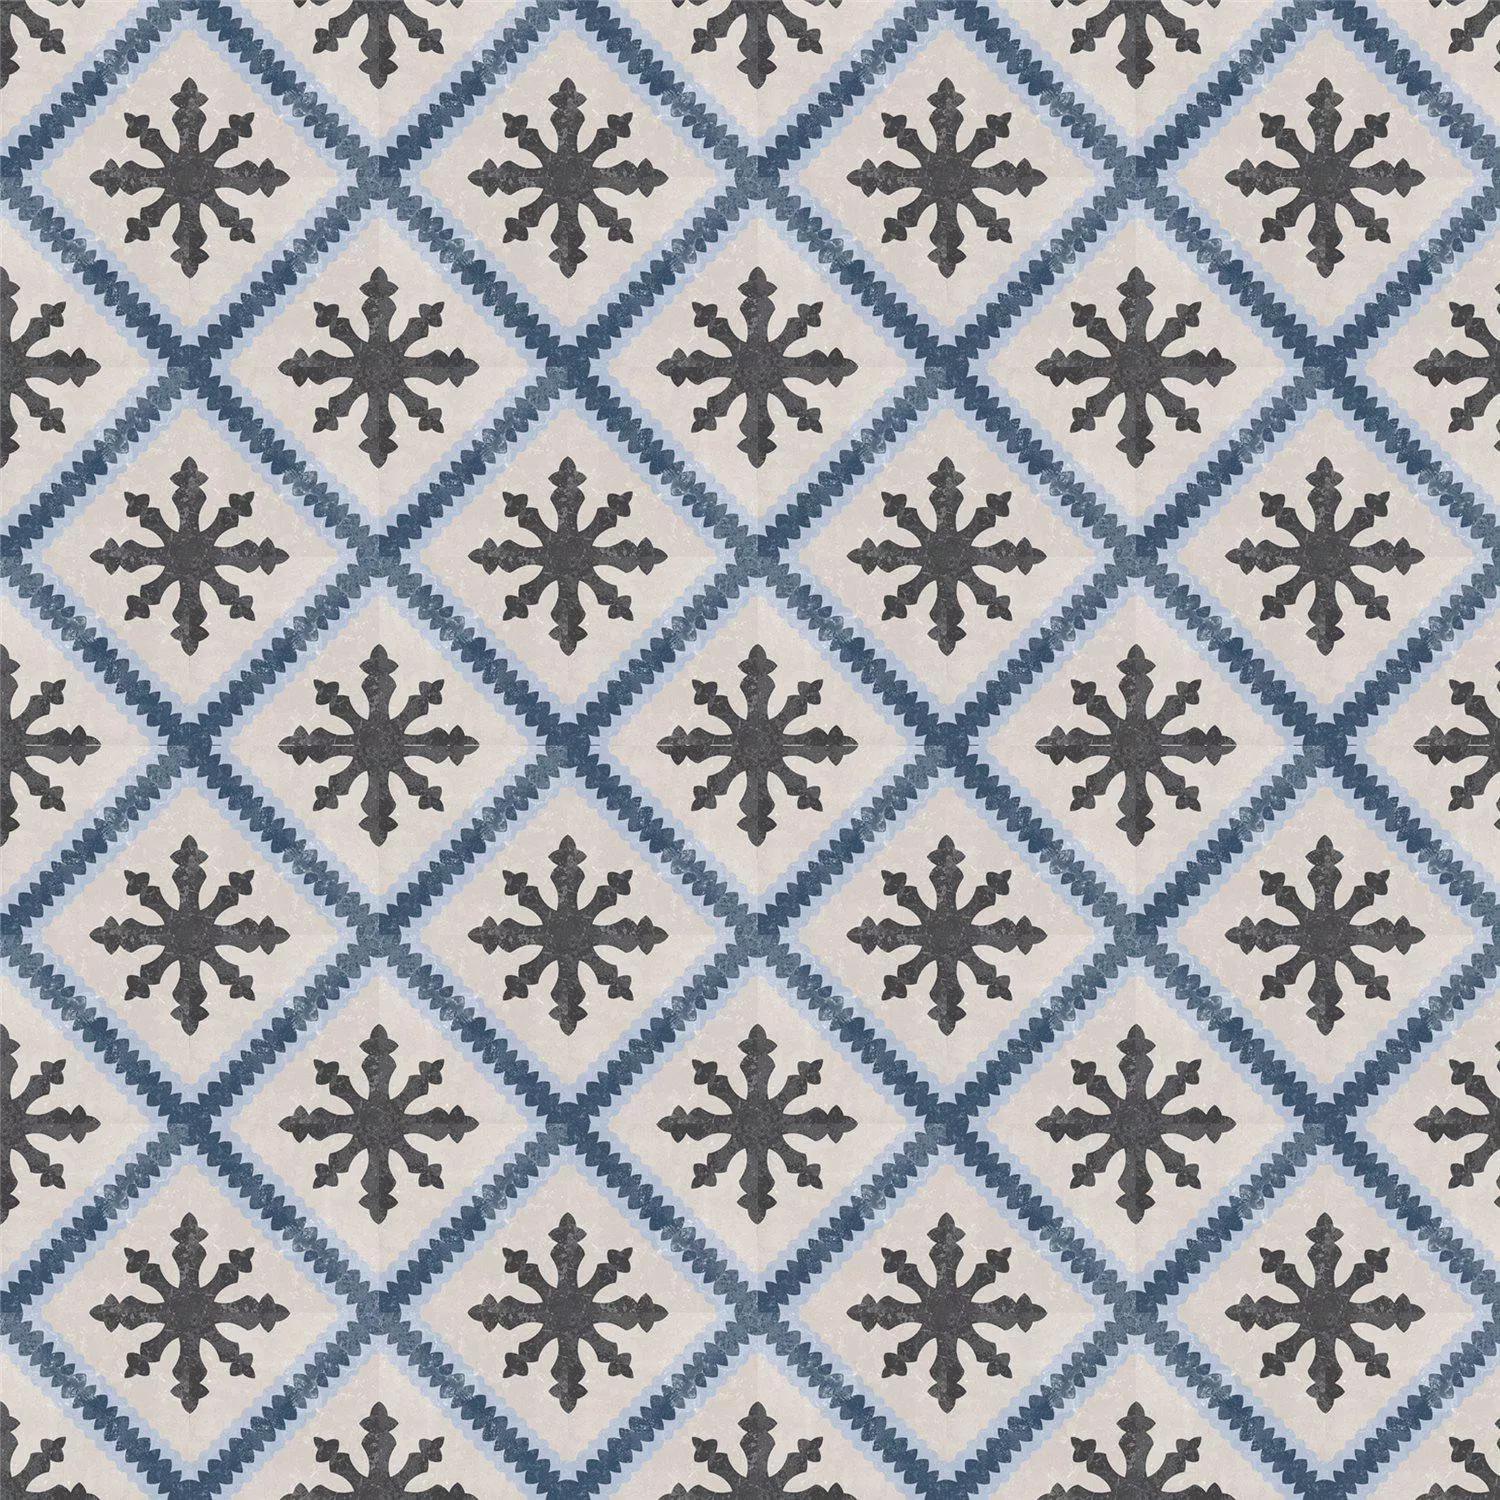 Sample Cement Tiles Retro Optic Gris Floor Tiles Chillida 18,6x18,6cm